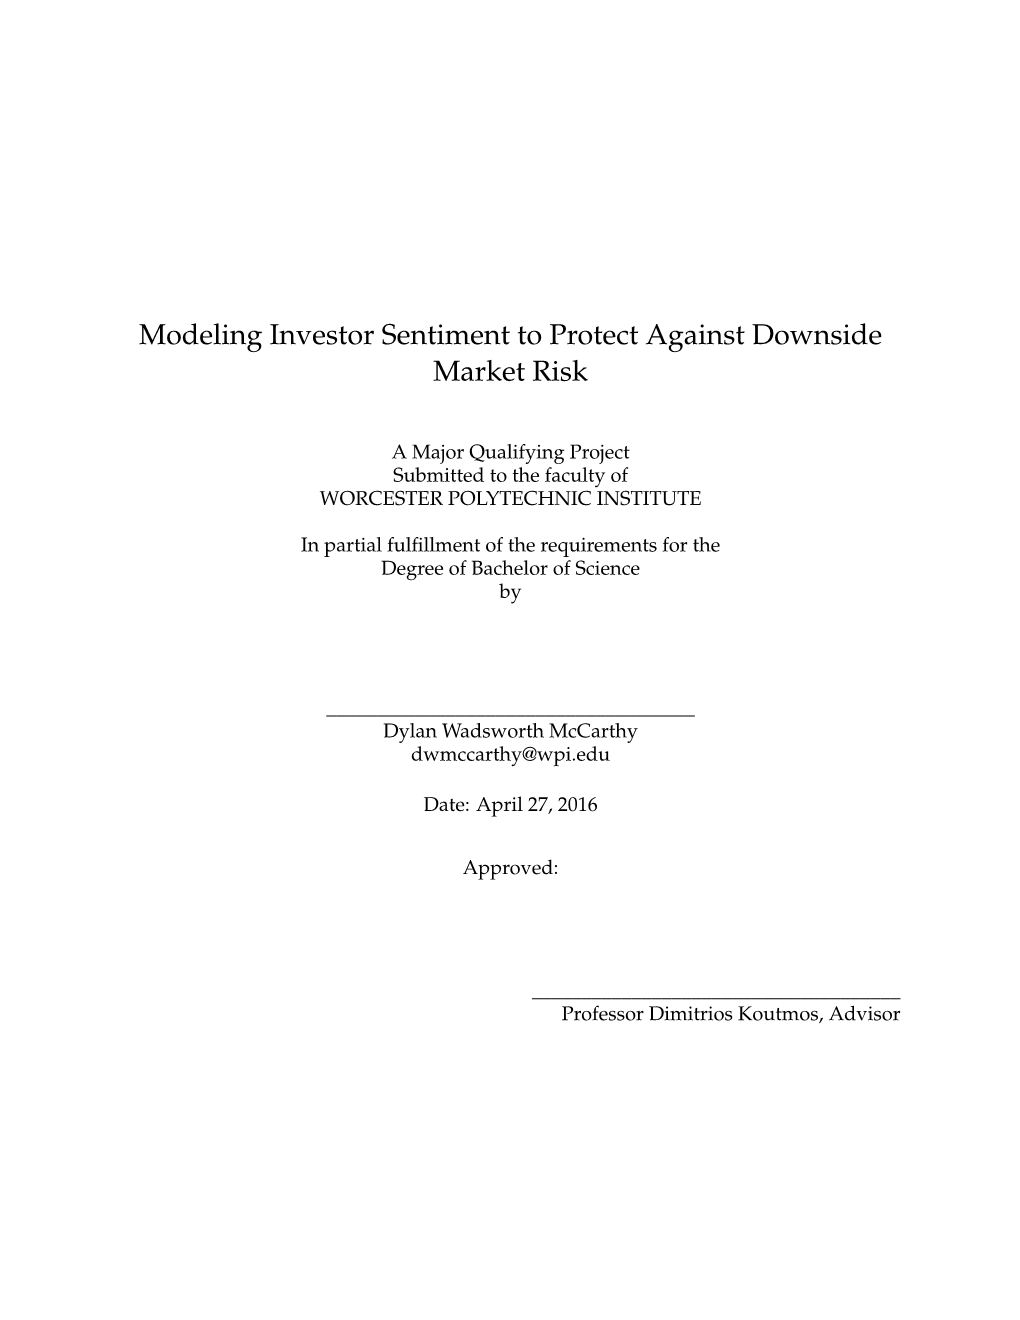 Modeling Investor Sentiment to Protect Against Downside Market Risk